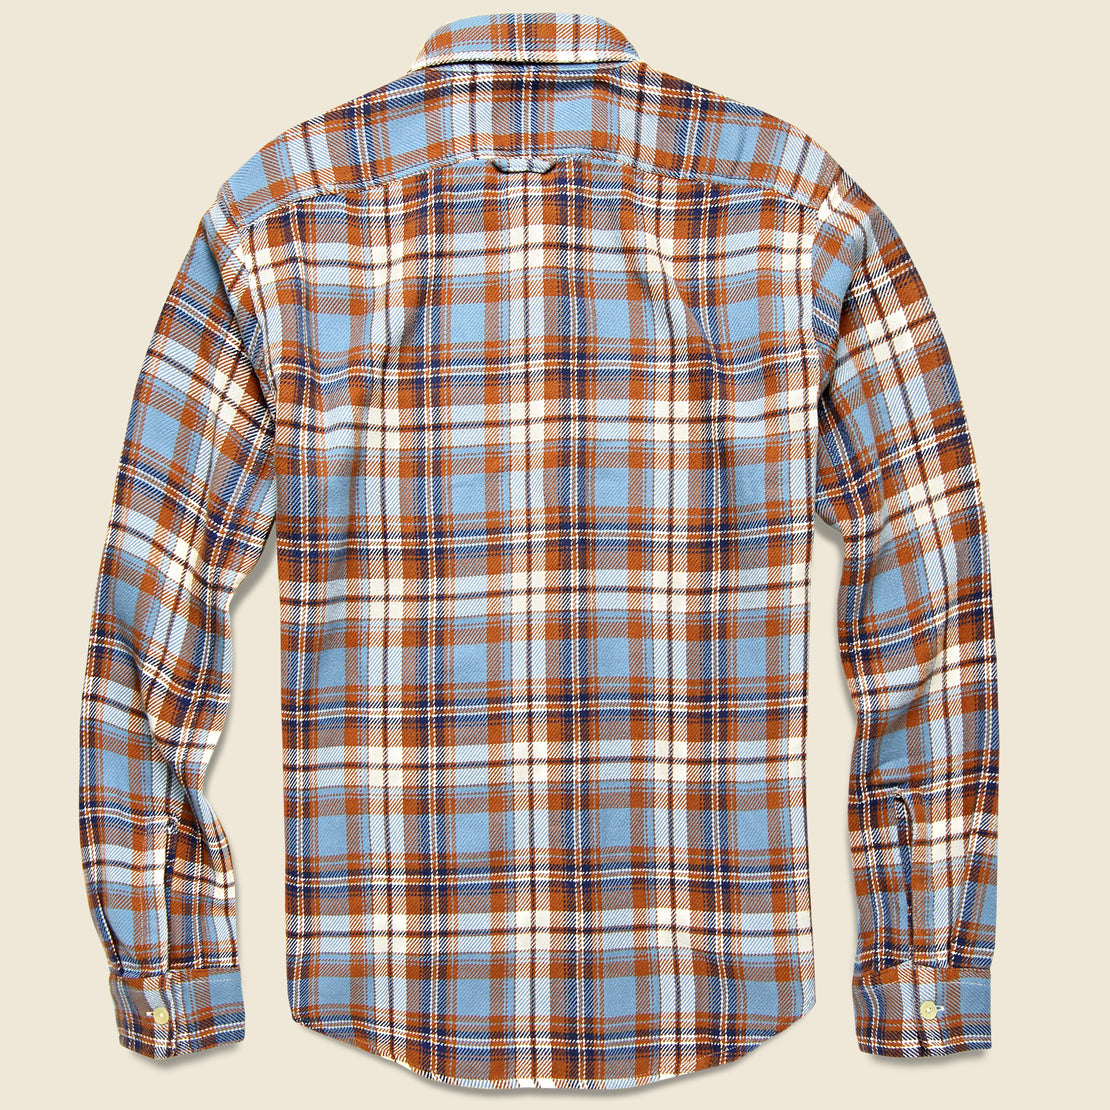 Fall Plaid Chore Shirt - Light Blue/Tan - Alex Mill - STAG Provisions - Tops - L/S Woven - Plaid